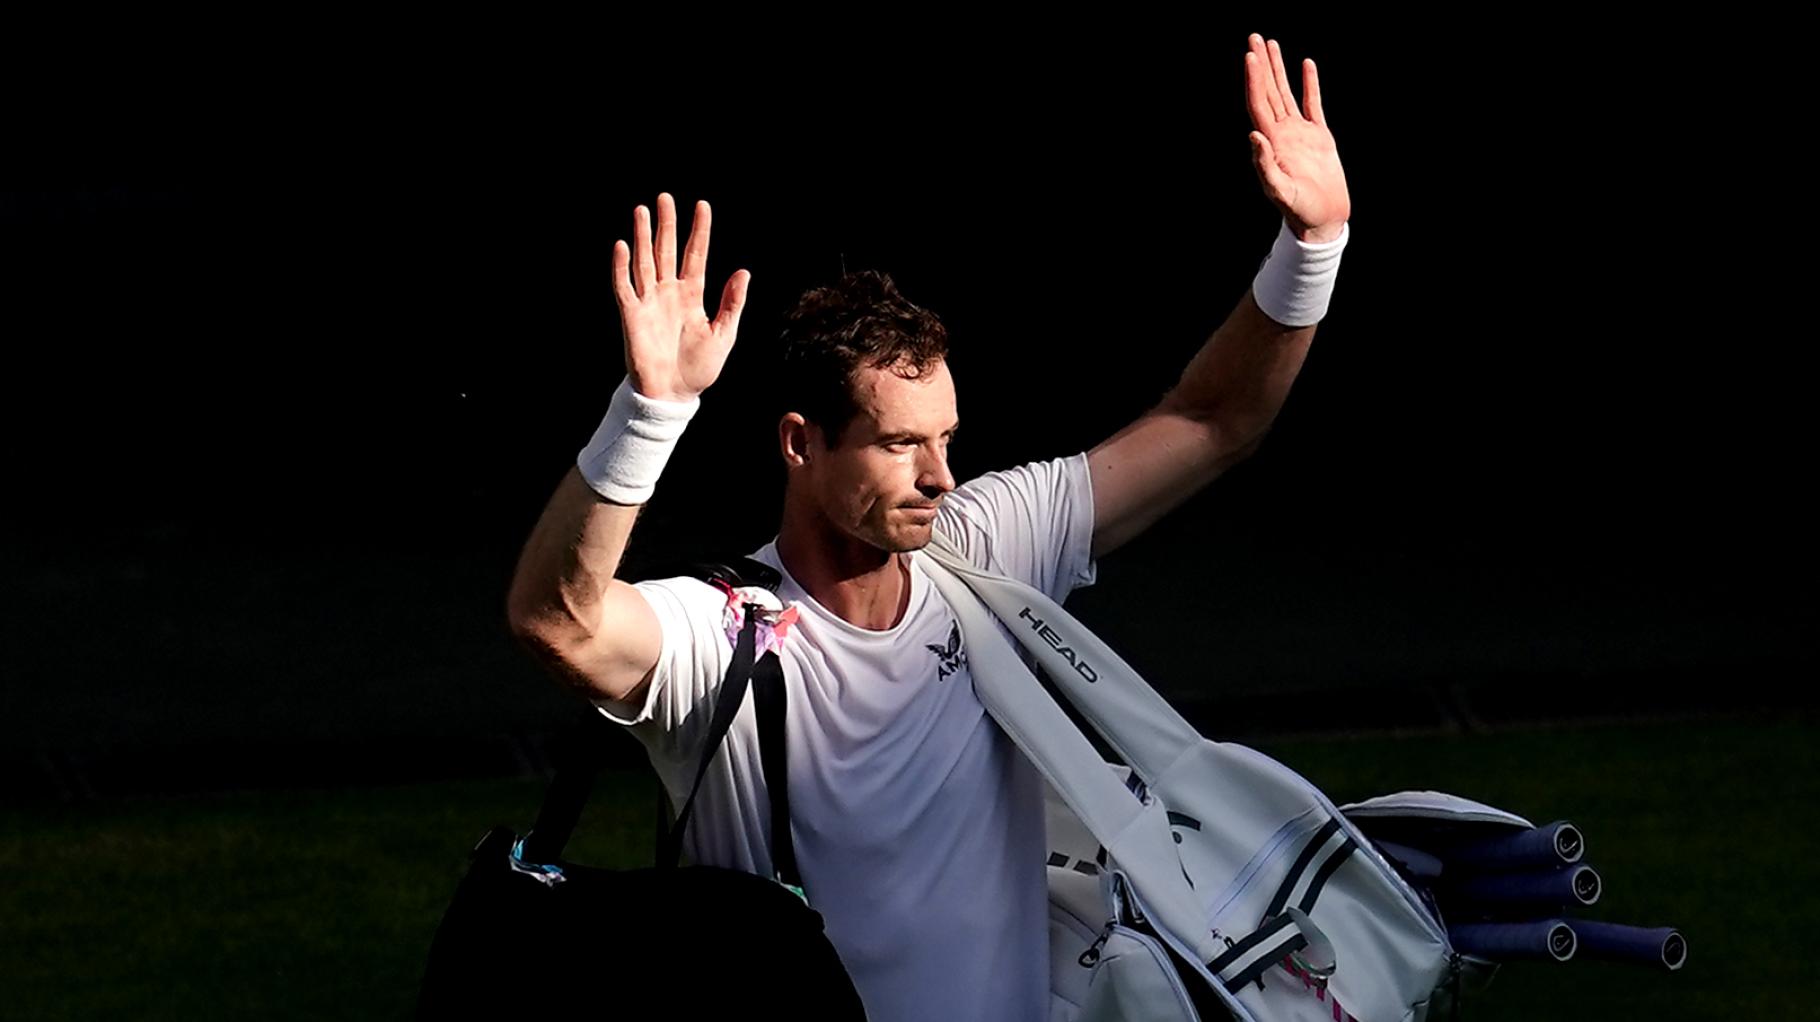 Olympiasieger Andy Murray beendet Karriere nach Sommerspielen in Paris